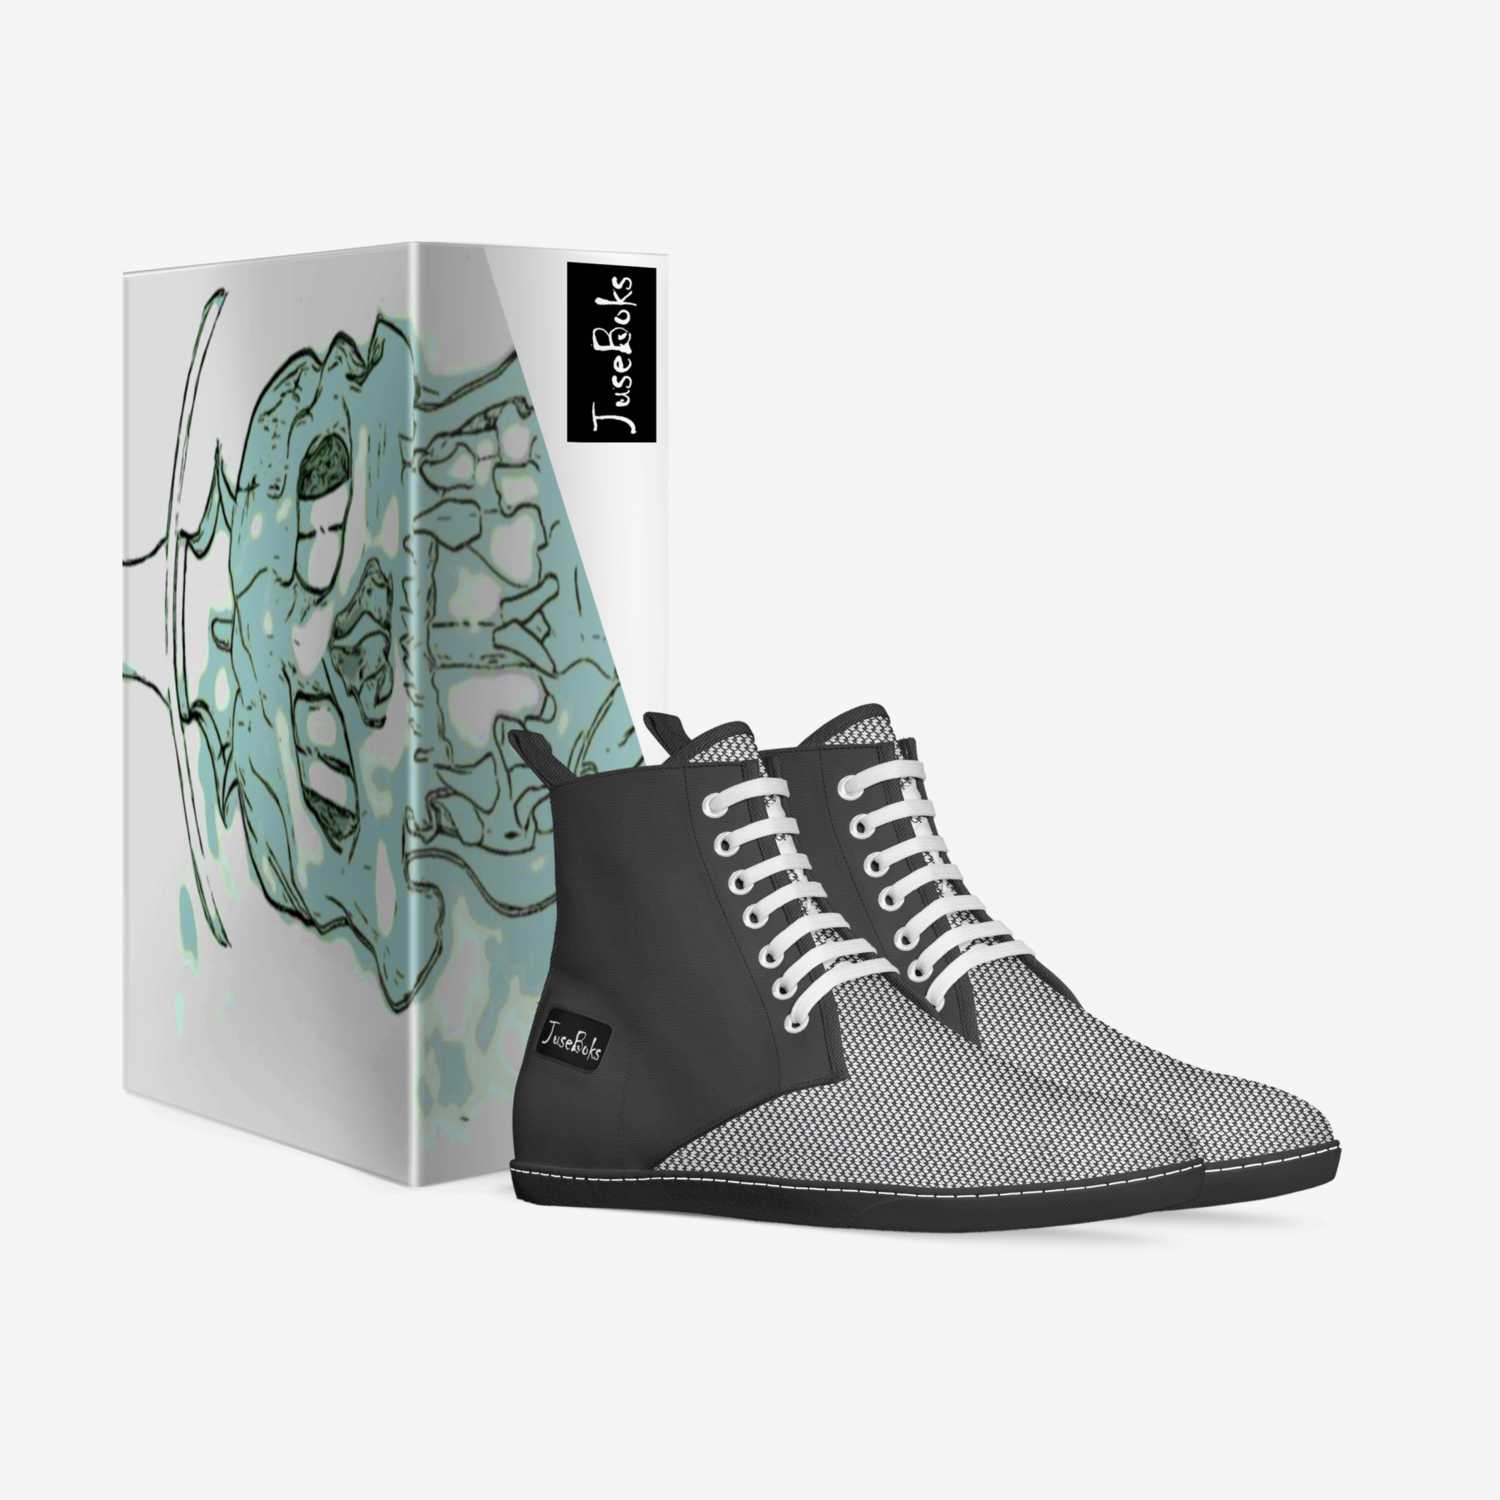 #ALMA101 custom made in Italy shoes by Joshua Jusino | Box view